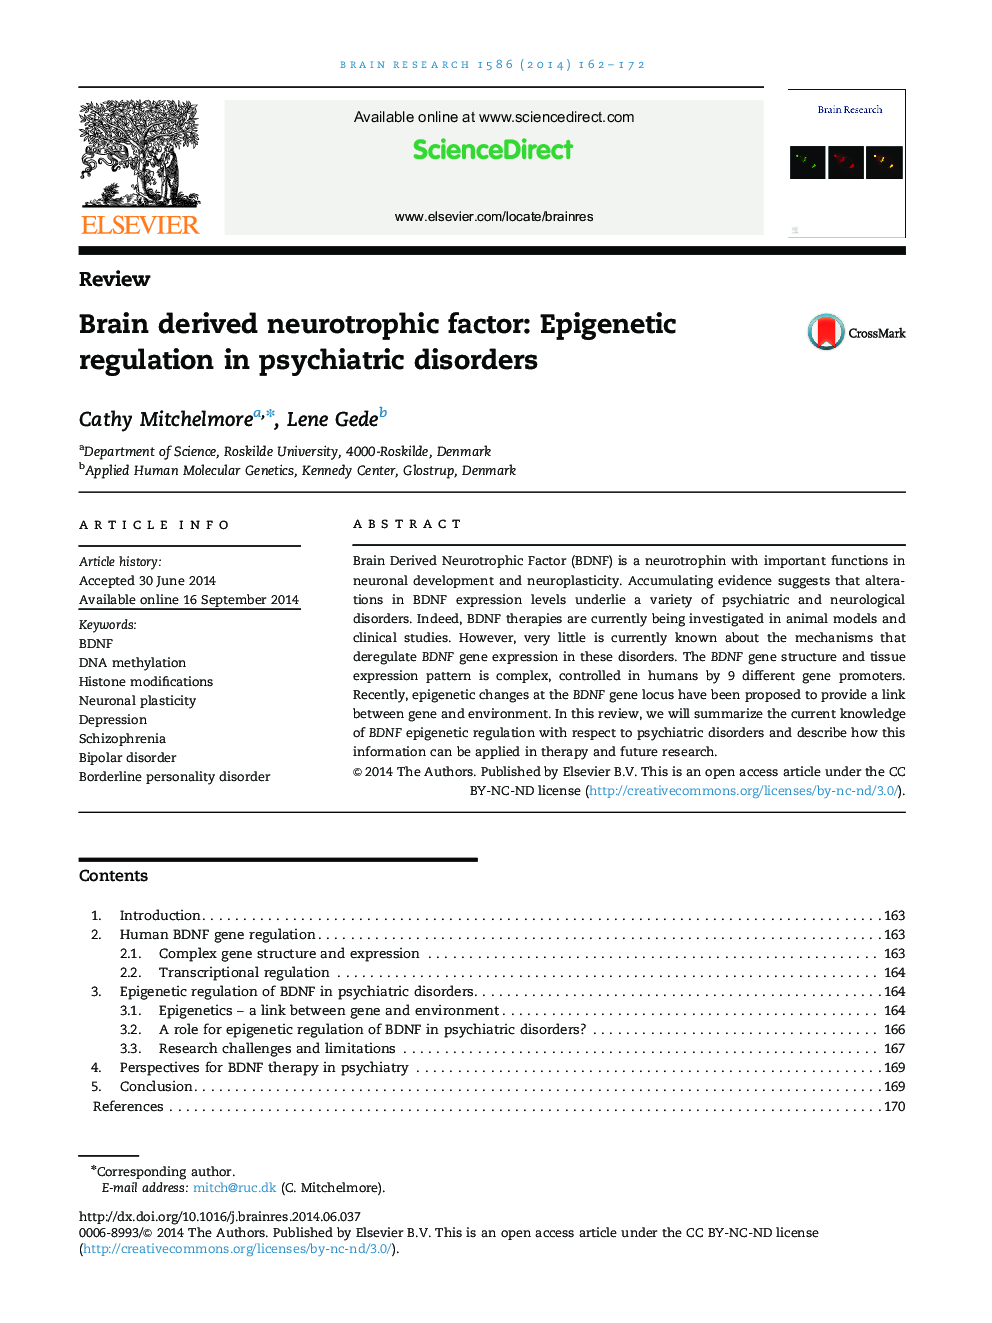 ReviewBrain derived neurotrophic factor: Epigenetic regulation in psychiatric disorders